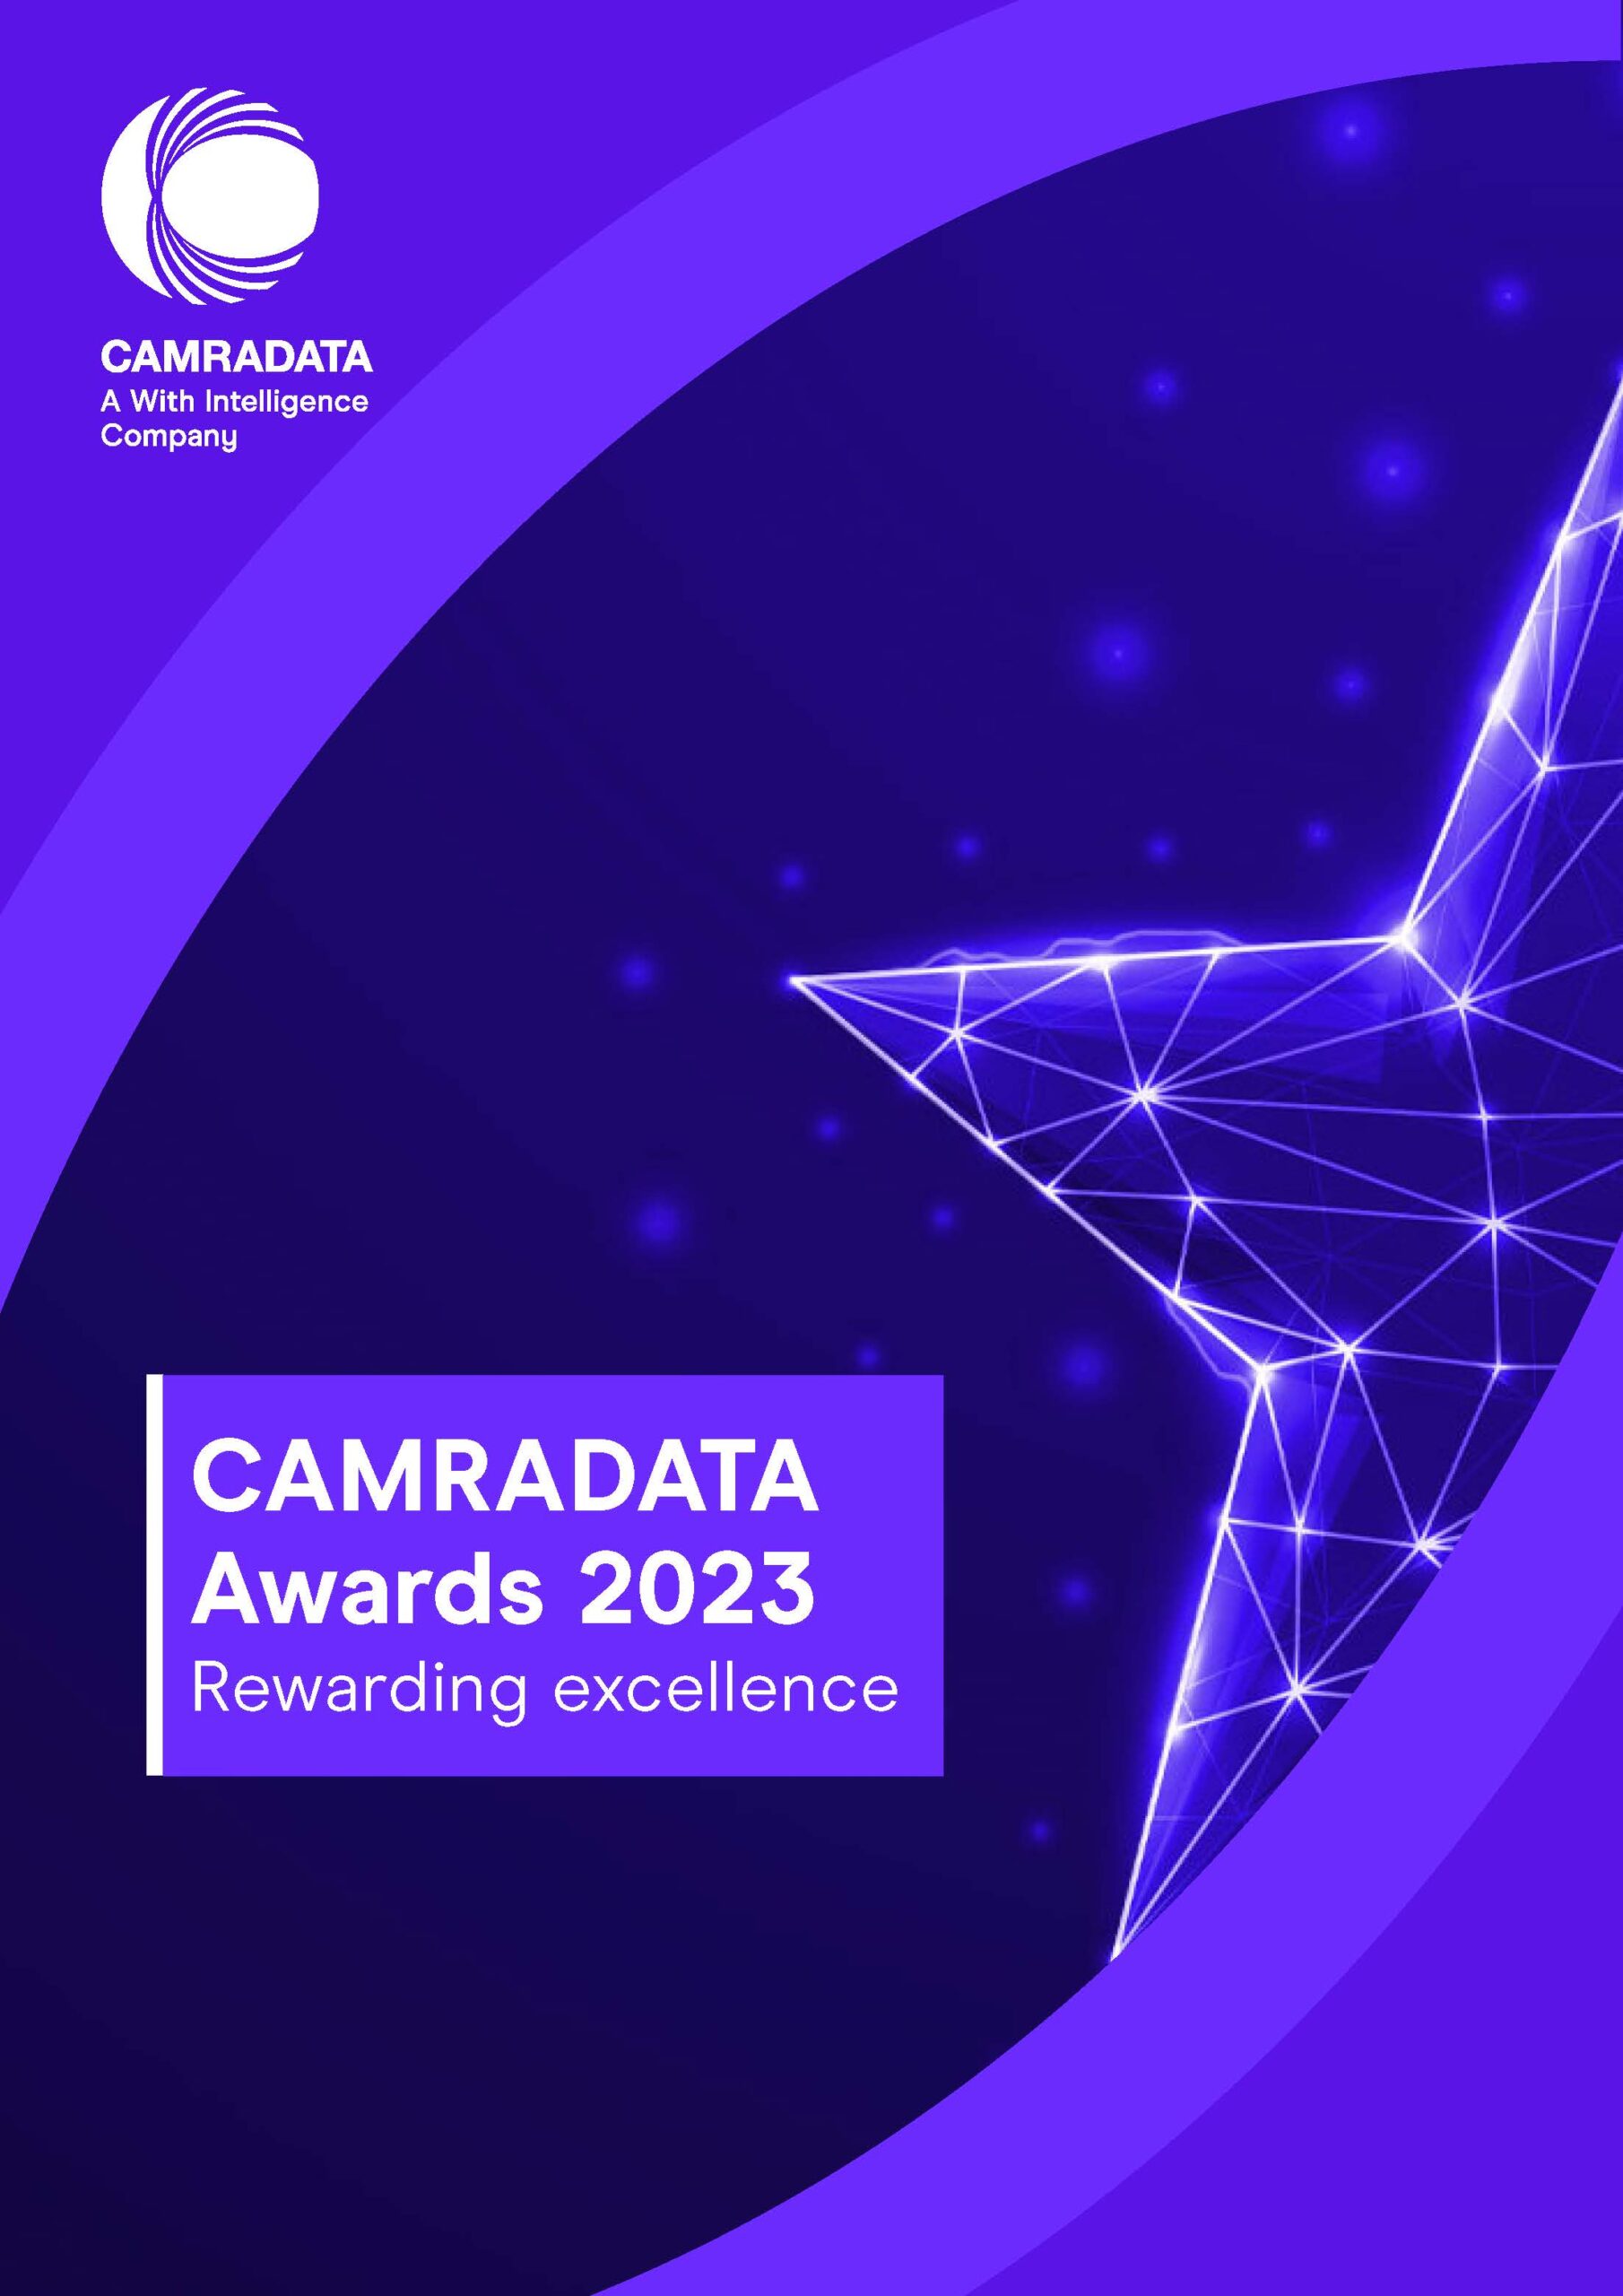 CAMRADATA Awards 2023